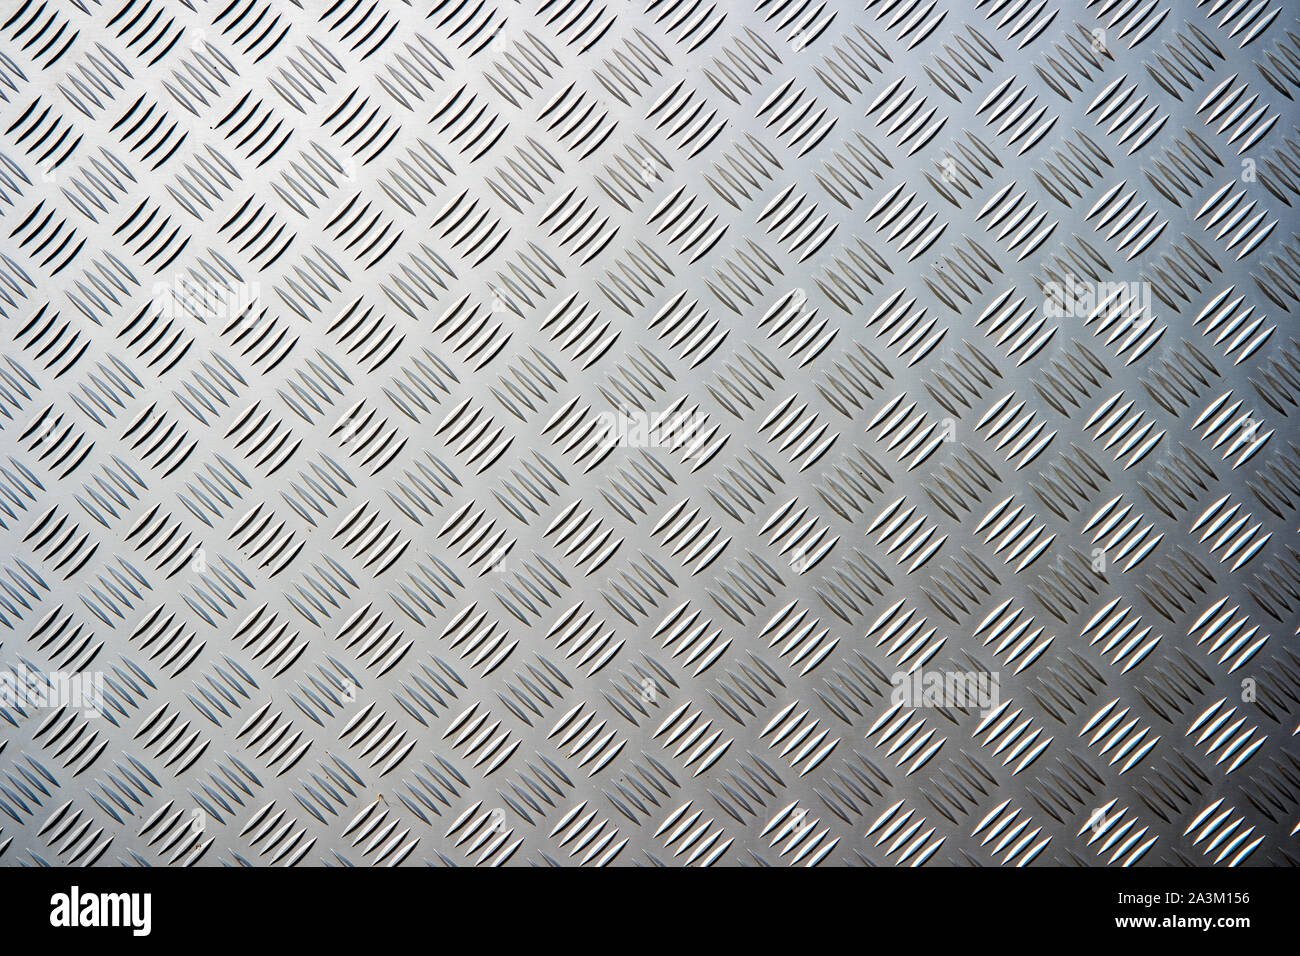 Silver Checker plate Template Stock Photo